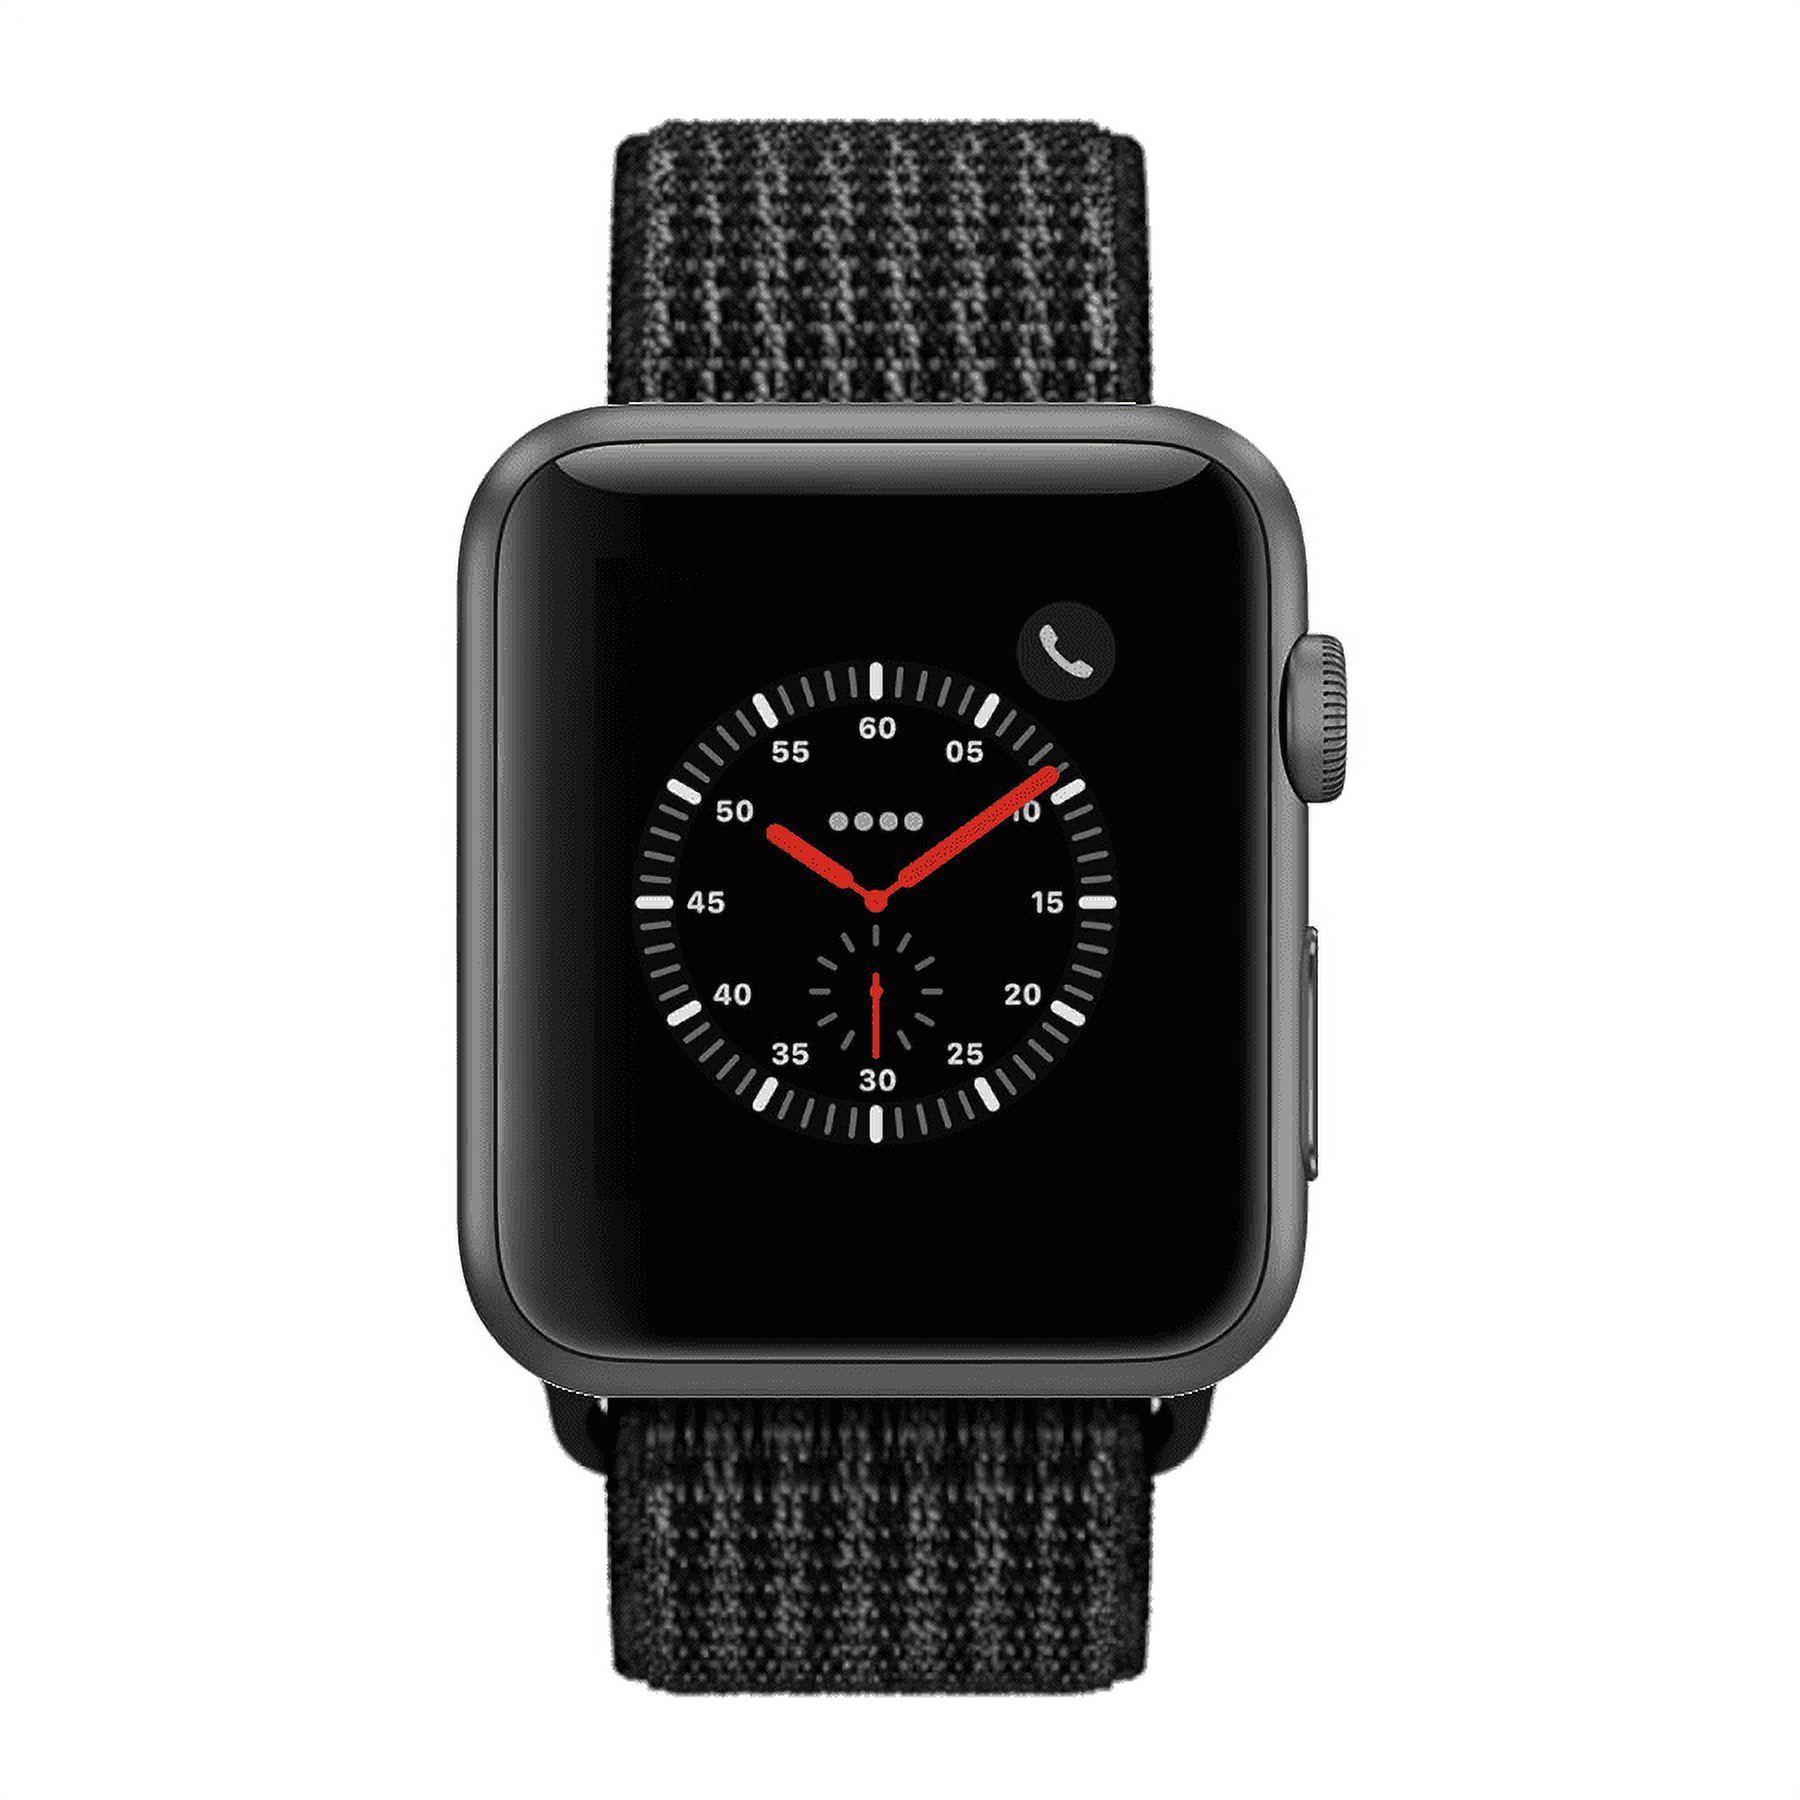 Apple Watch Series 2 - 42mm, WiFi - Space Gray with Black Sport Loop - Used - image 1 of 1